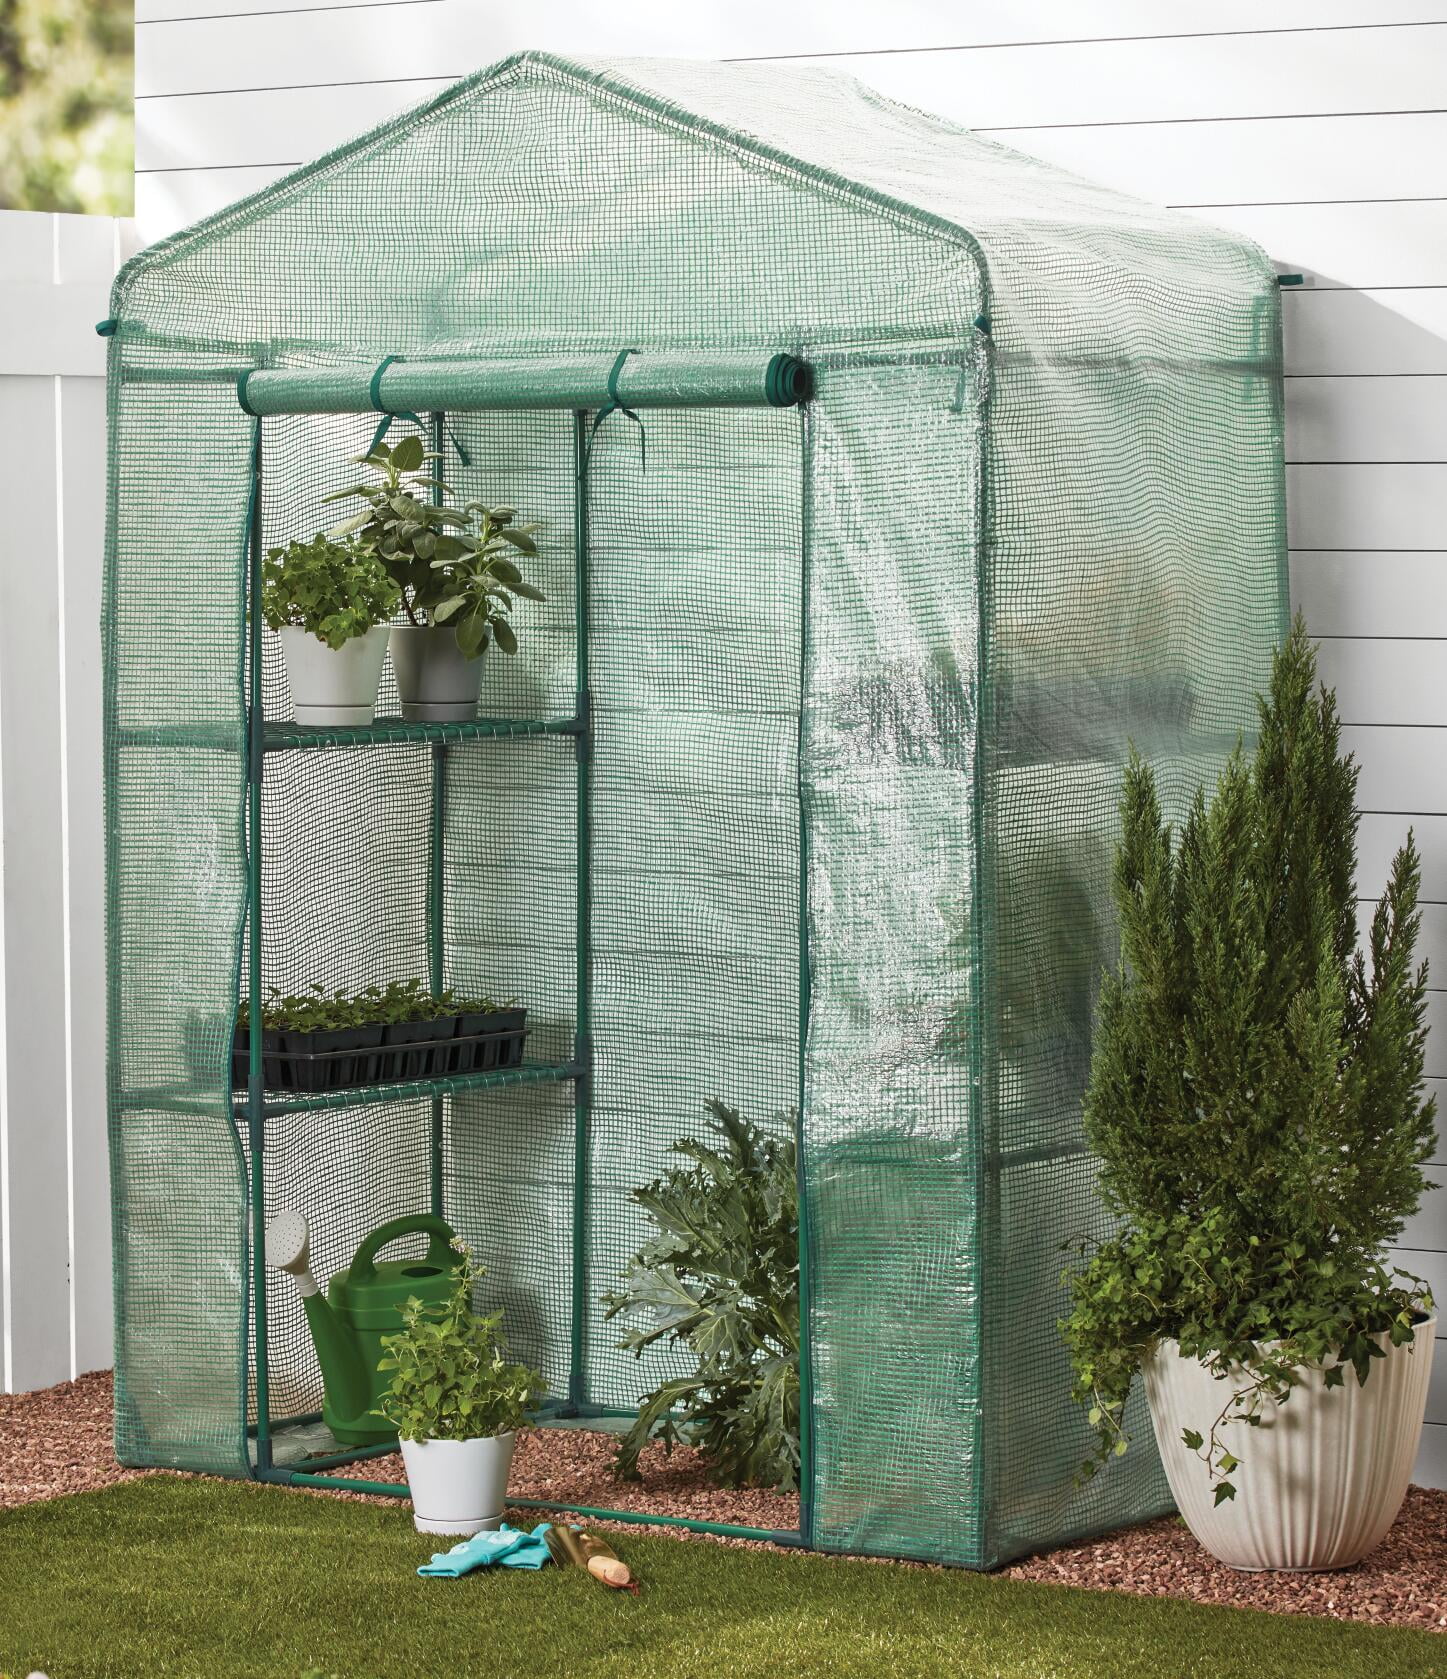 Portable Mini Greenhouse Outdoor Plant Shelves Walk-in Garden Winter Green House 